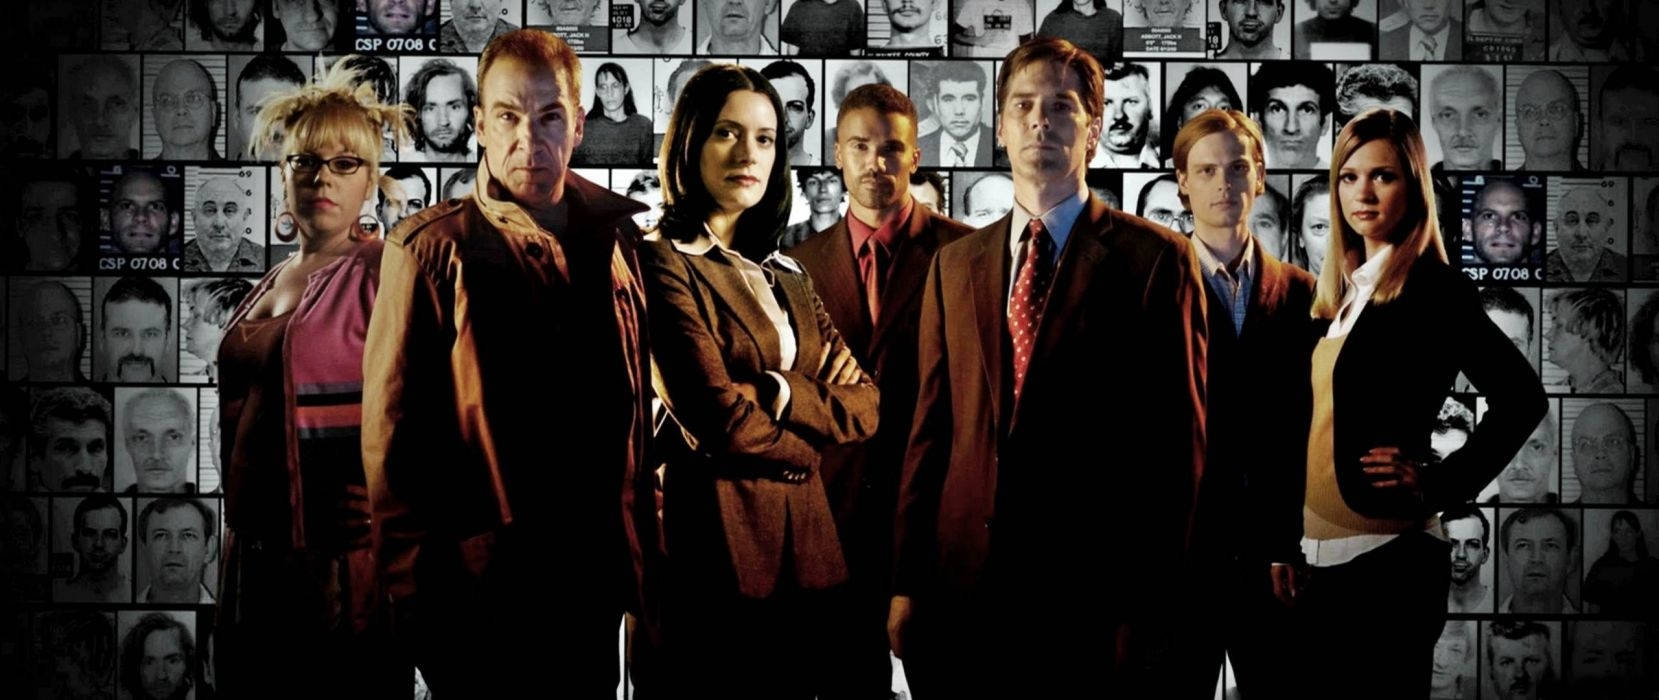 Intense Moments from Criminal Minds Season 2 Wallpaper